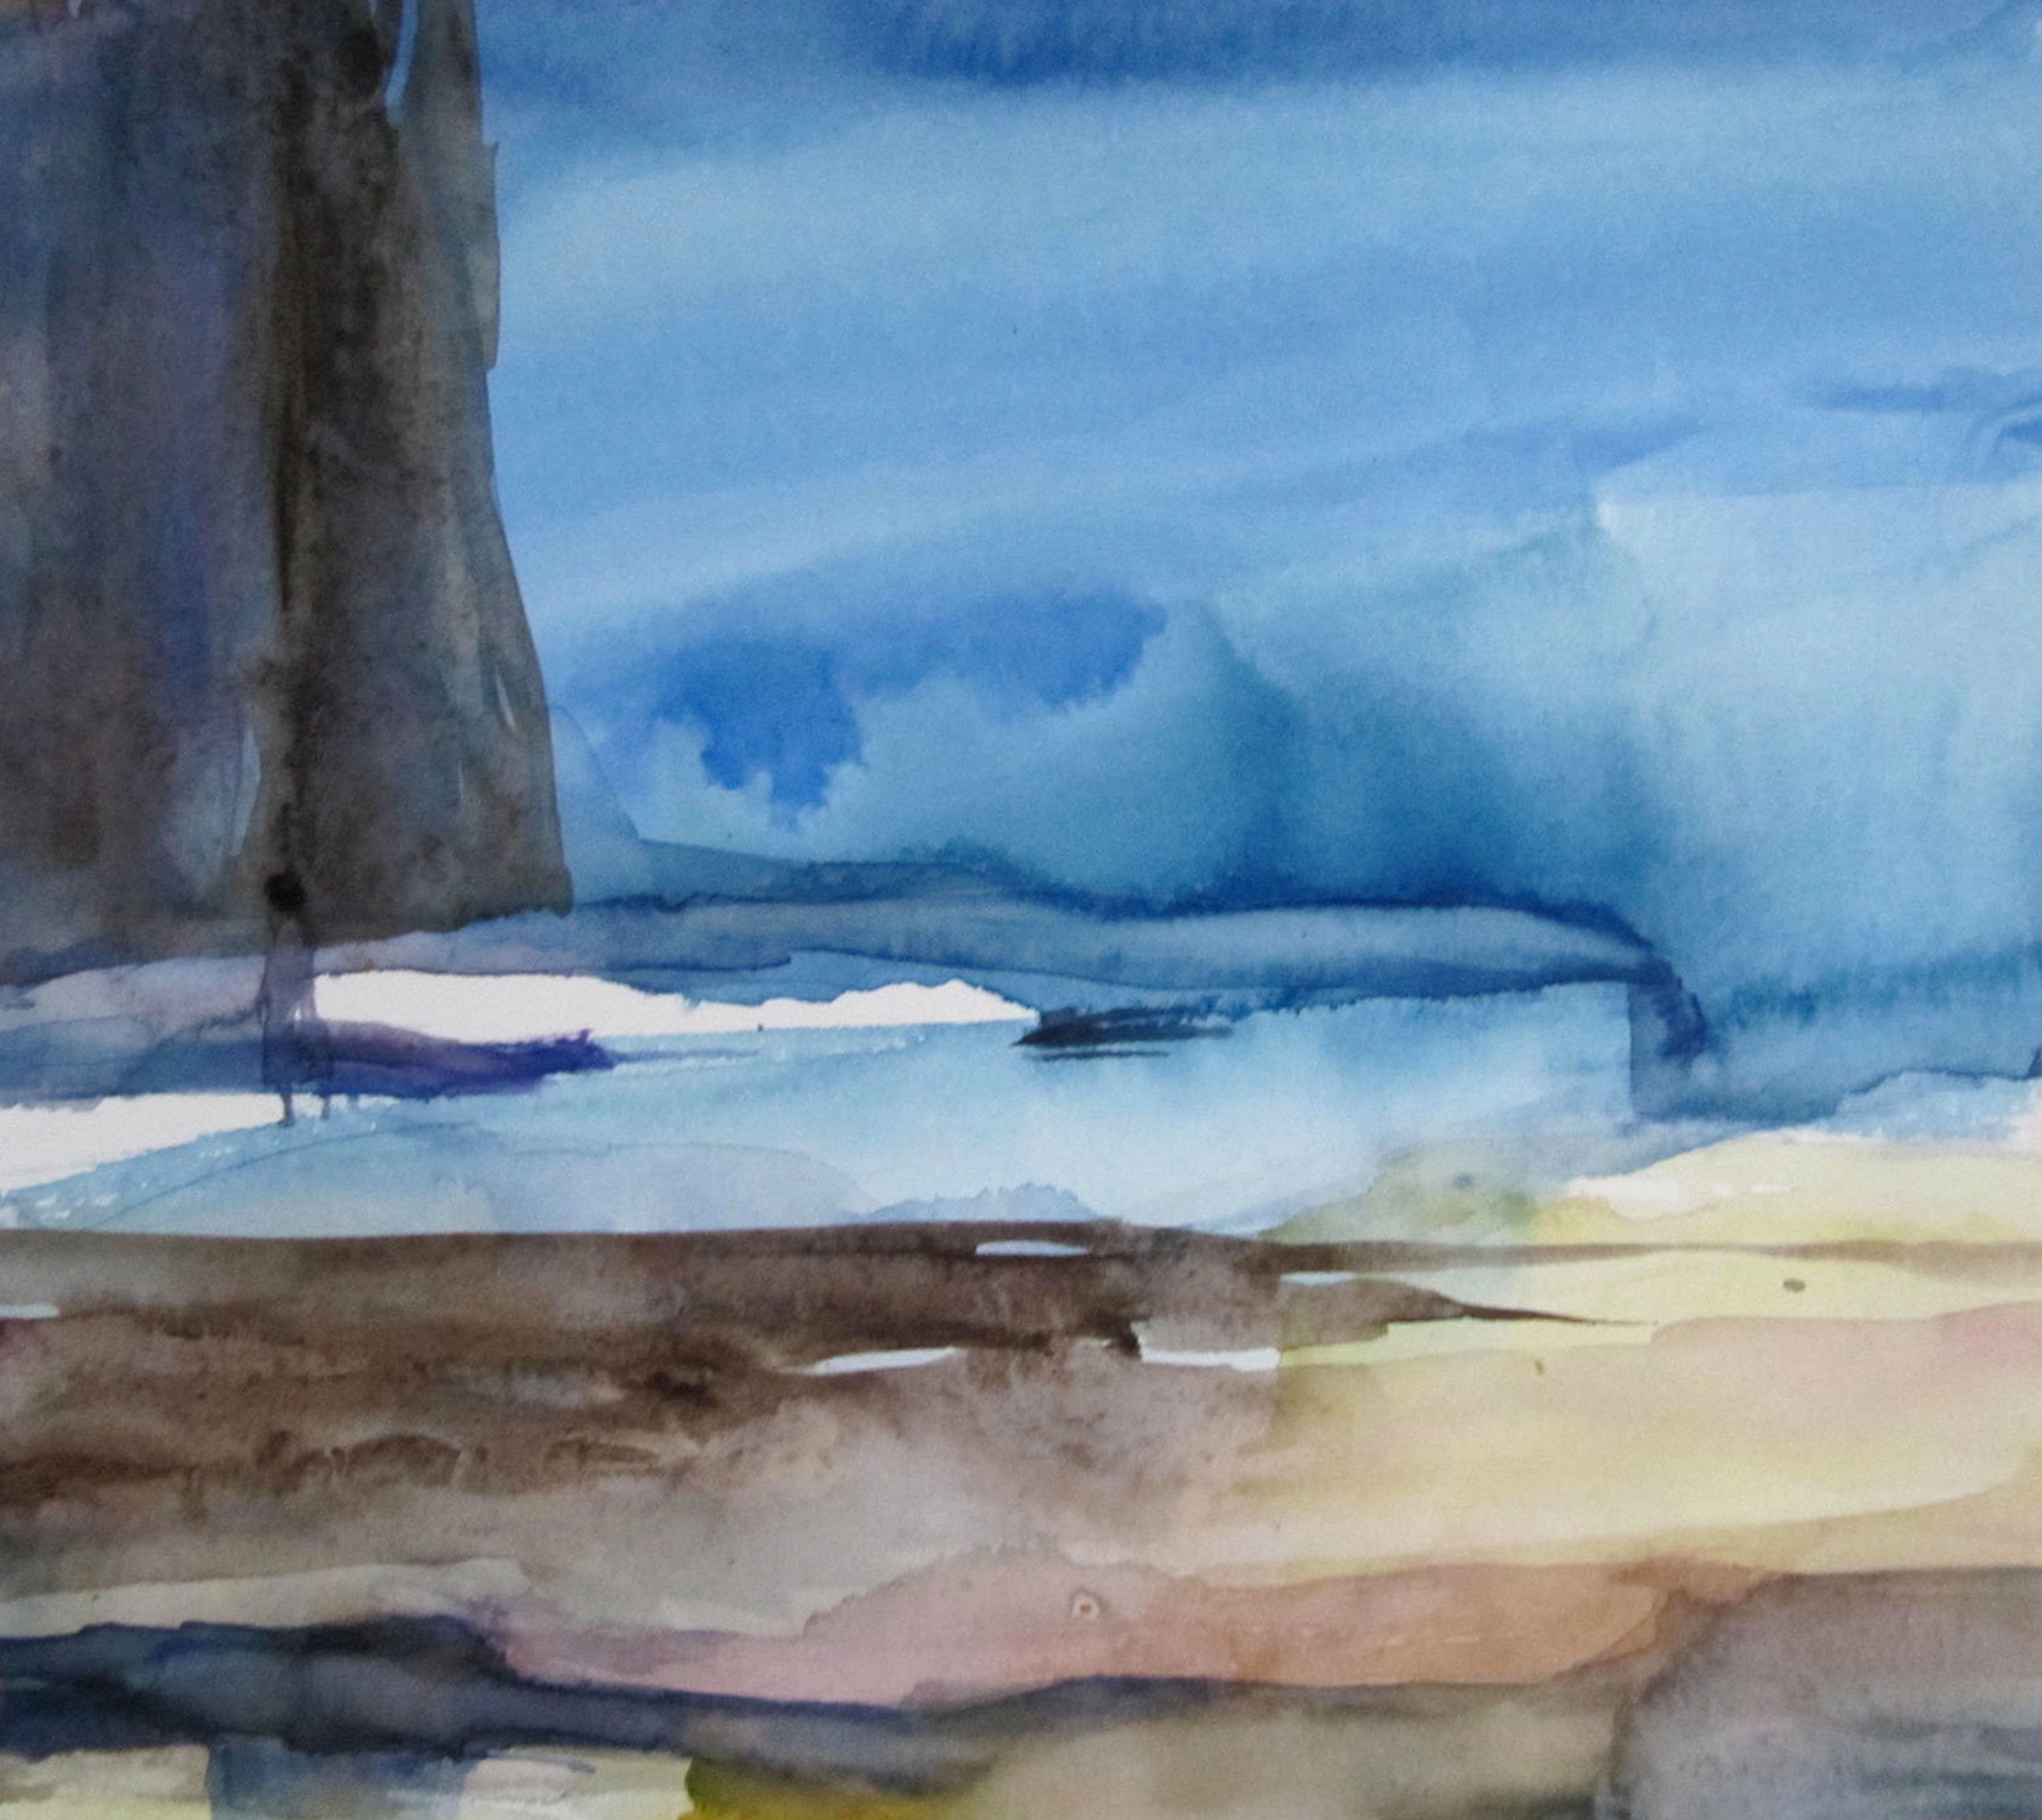 Sylvia Baldeva的《乌托邦》展示了一幅水彩画风景画，风景，乌托邦，不现实，梦境，象征主义，抽象，康森®纸上的水彩画。颜色为蓝色、沙色、棕色。